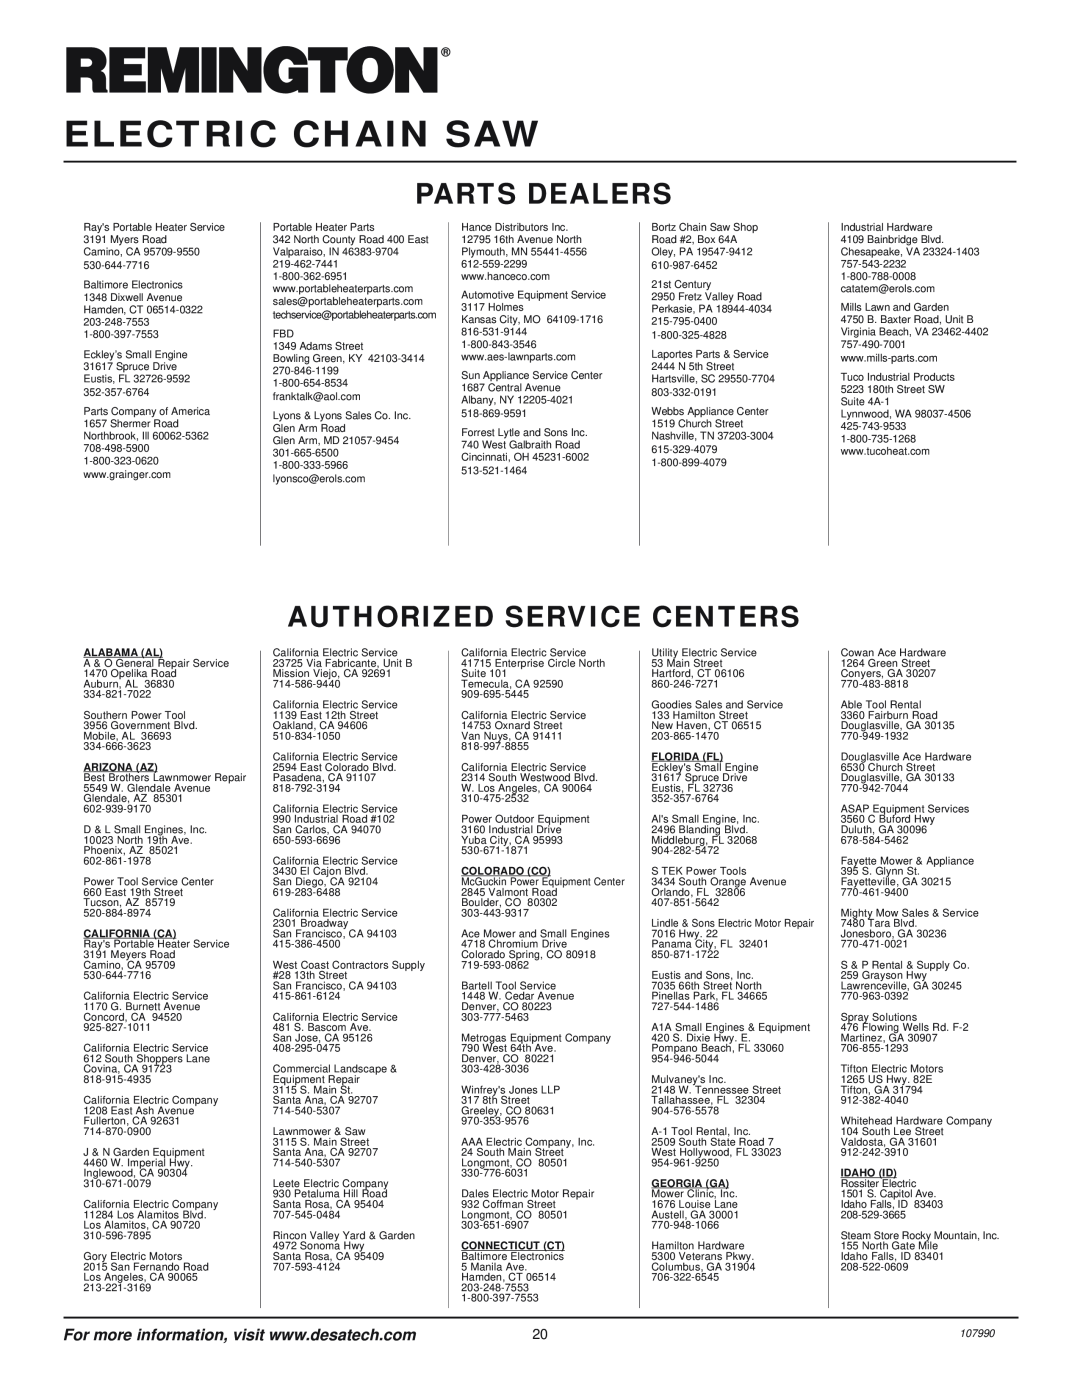 Desa LNT-2: 076728K Parts Dealers, Authorized Service Centers, Electric Chain Saw, Alabama Al, Arizona Az, California Ca 